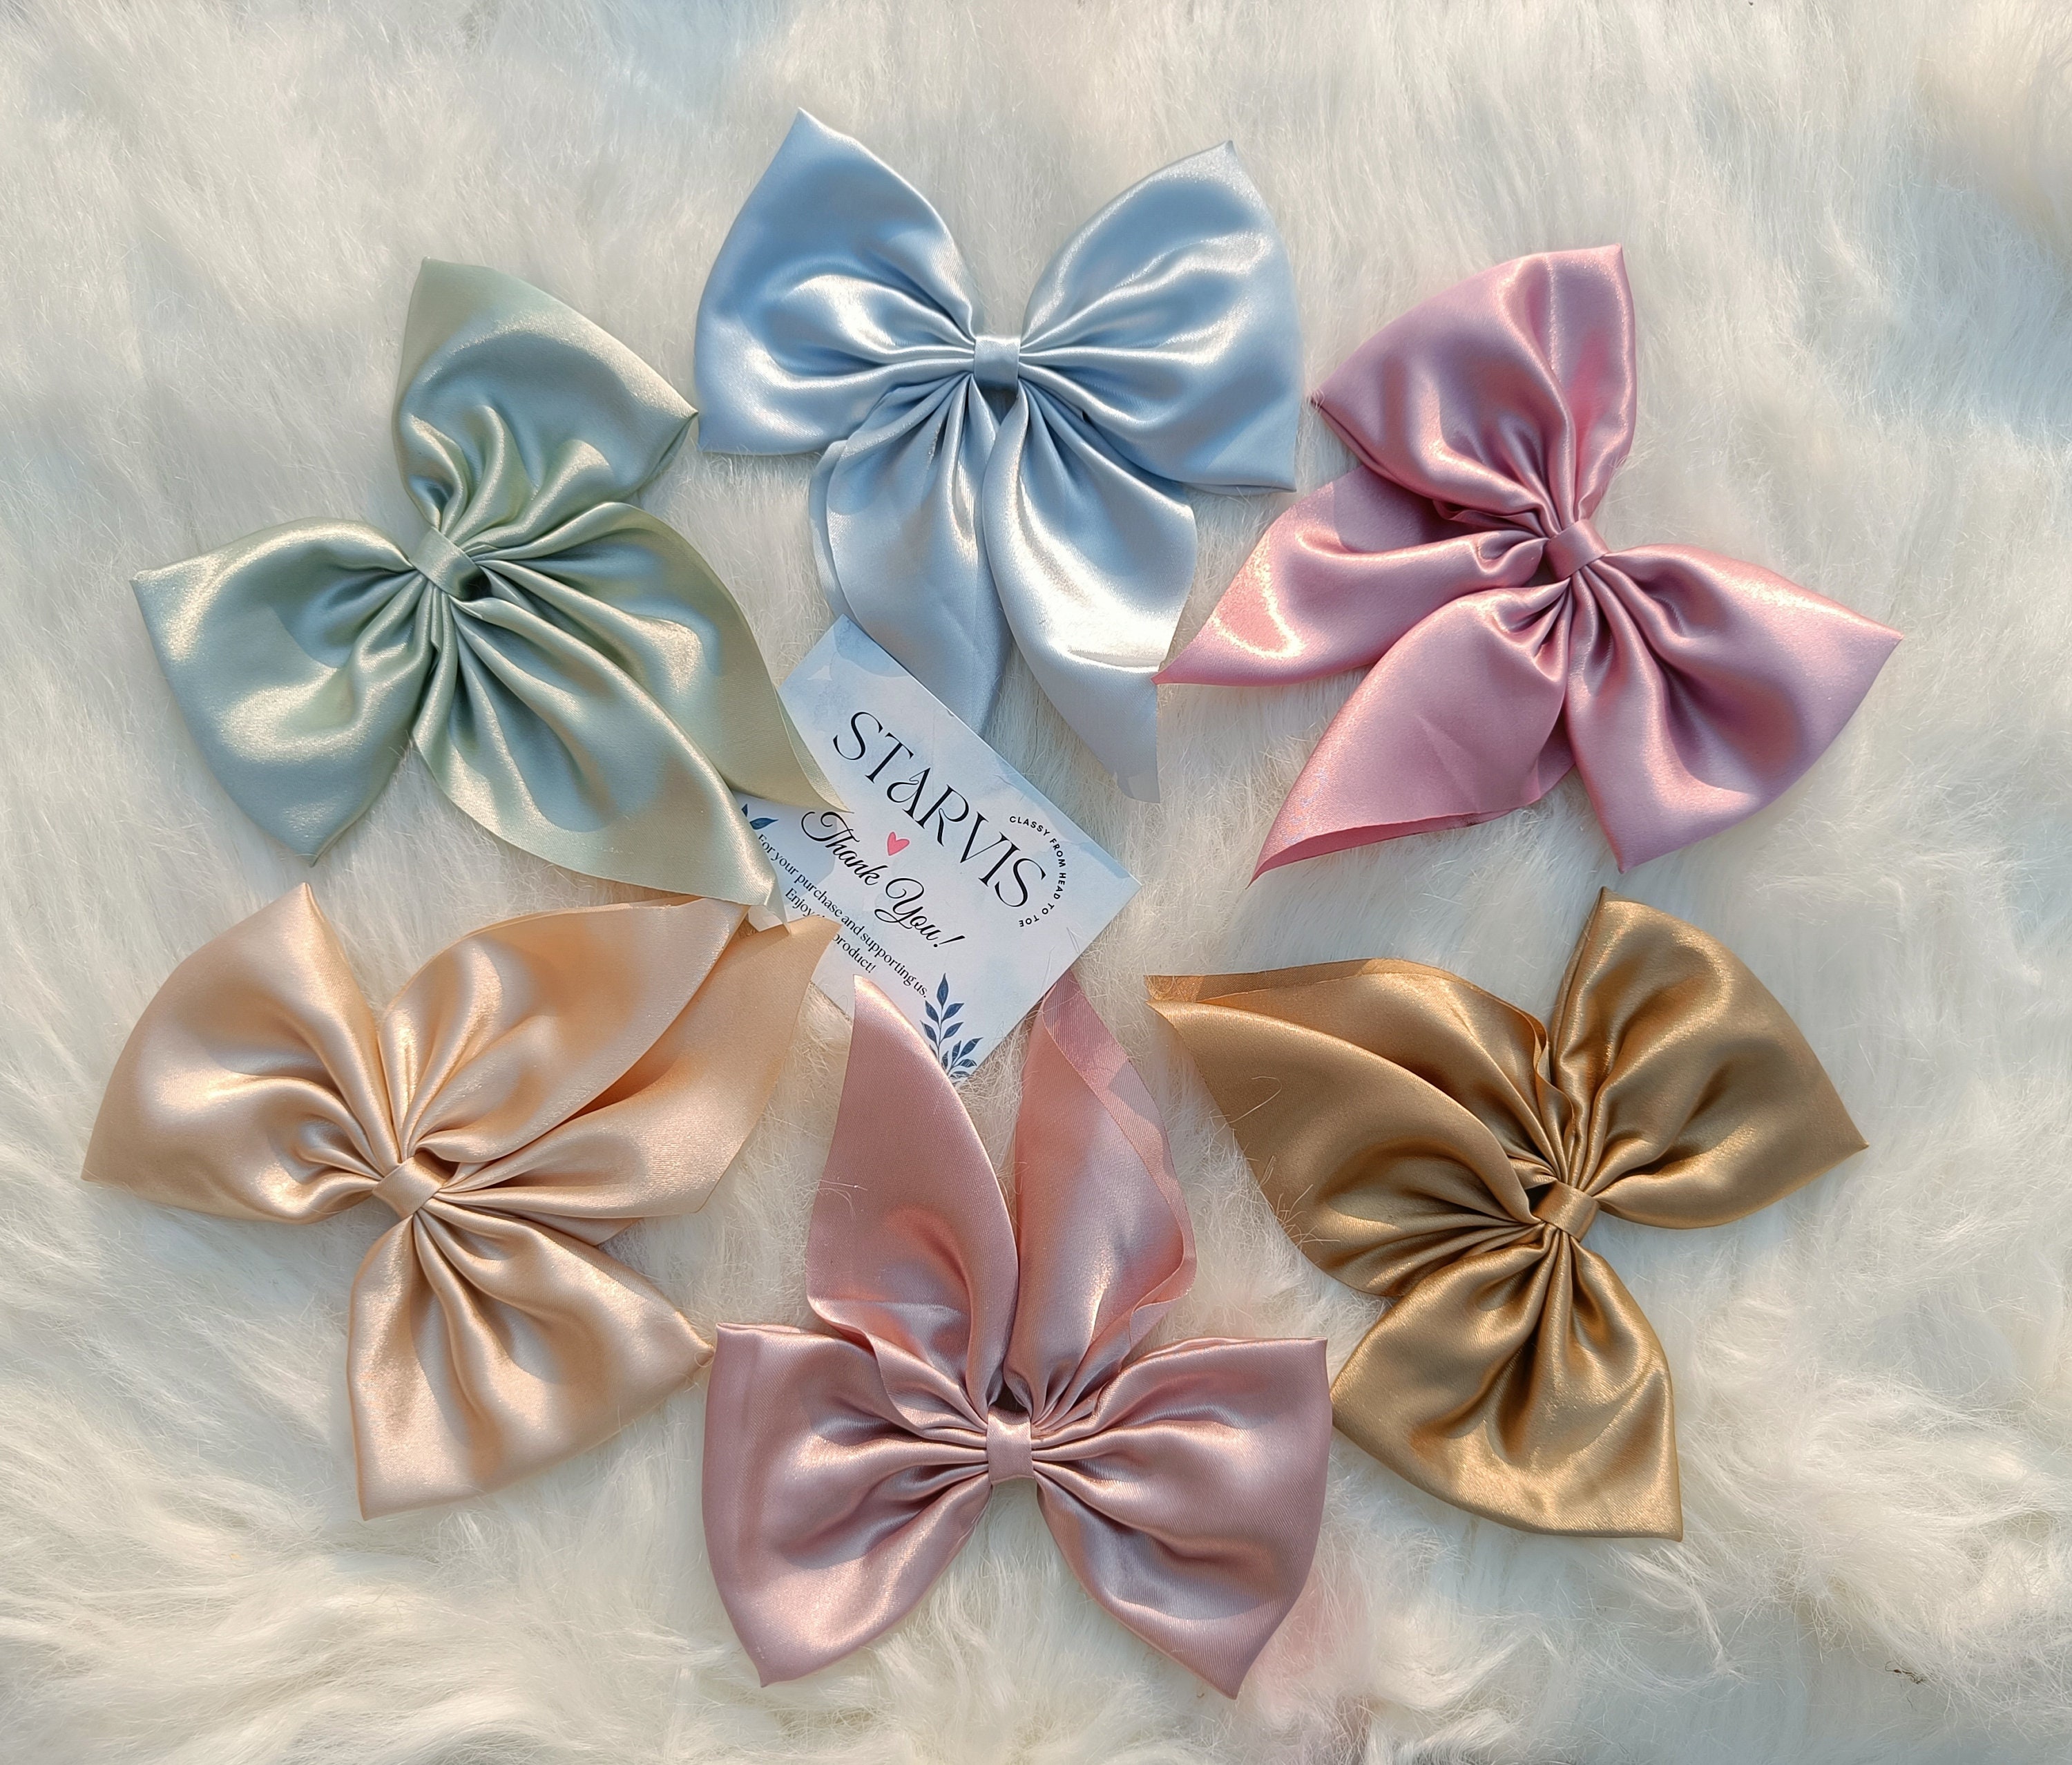 Silk ribbon and scrunchie set – Perlasilk